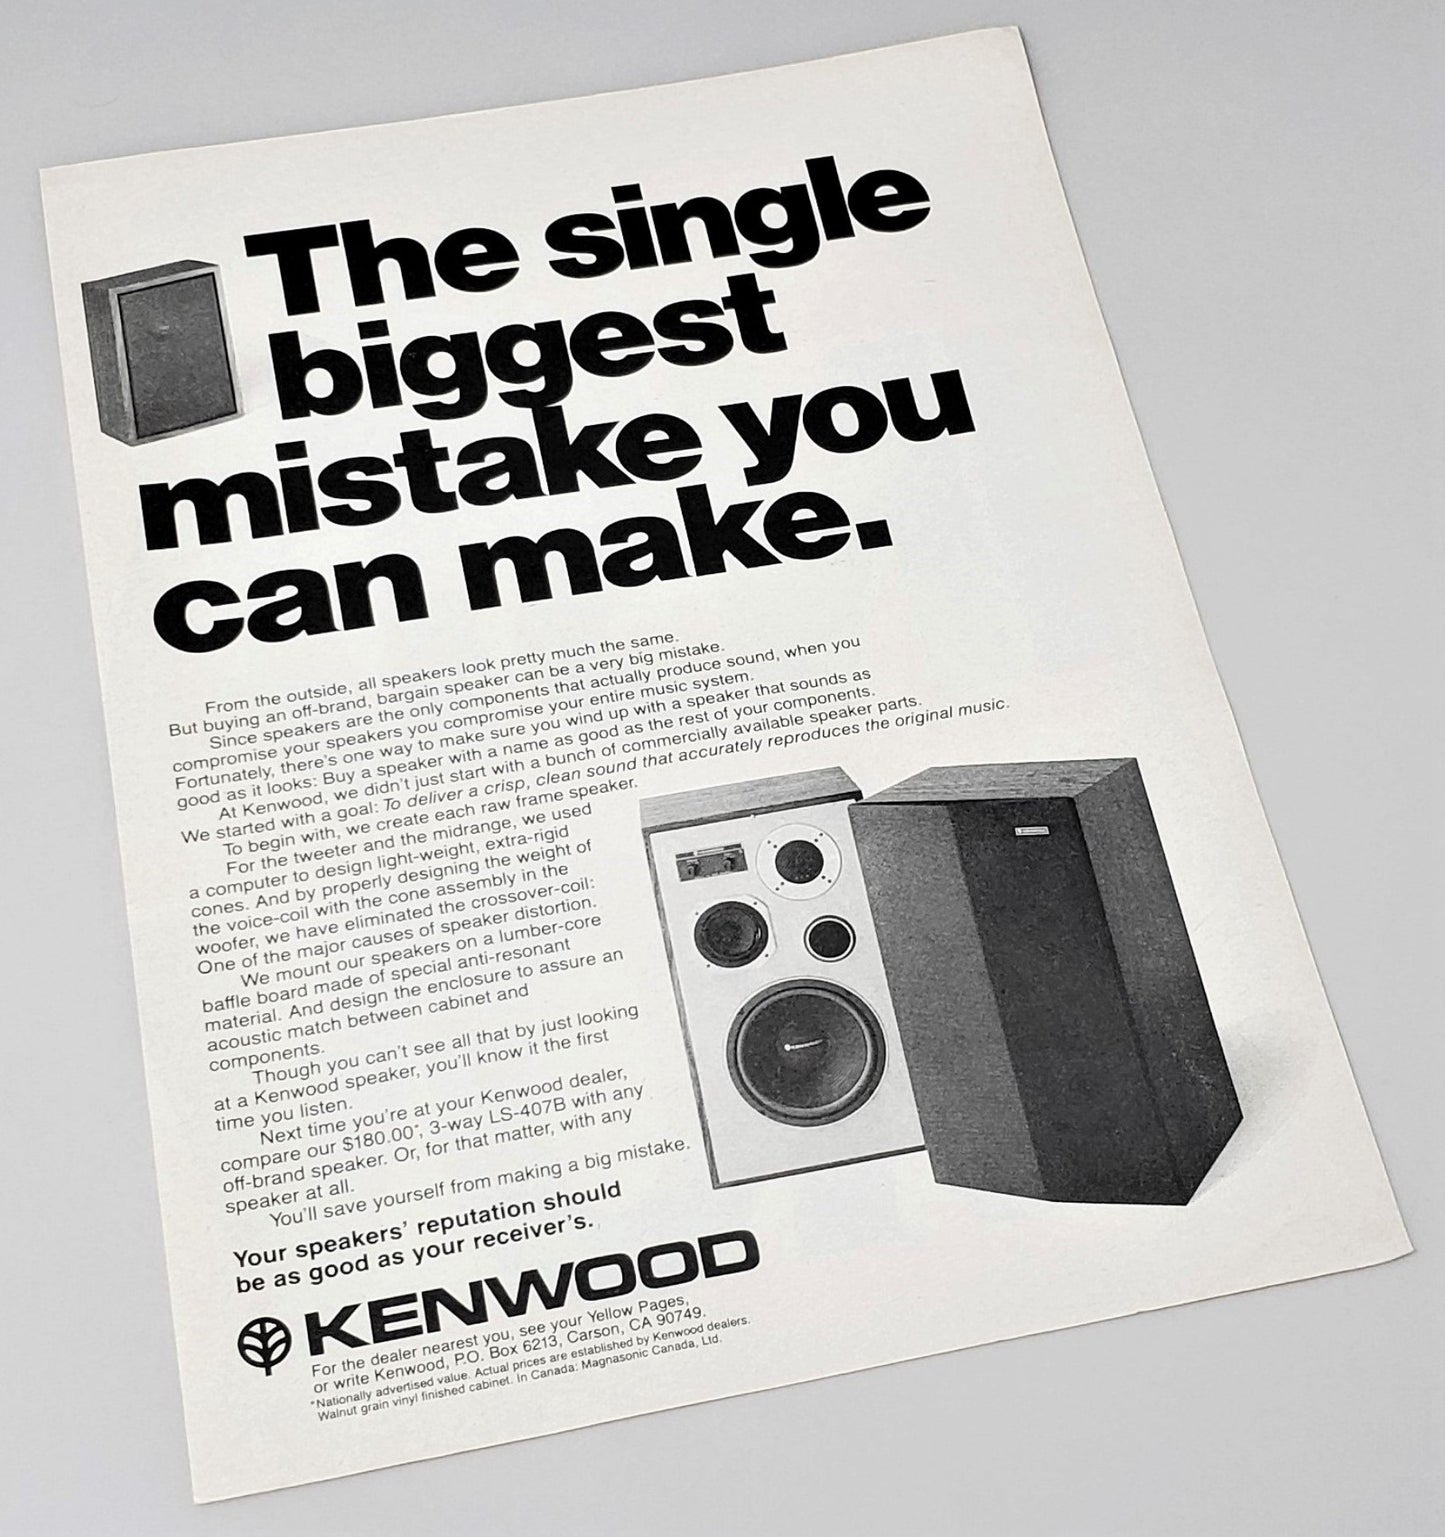 Original 1978 Kenwood ad featured in Playboy magazine